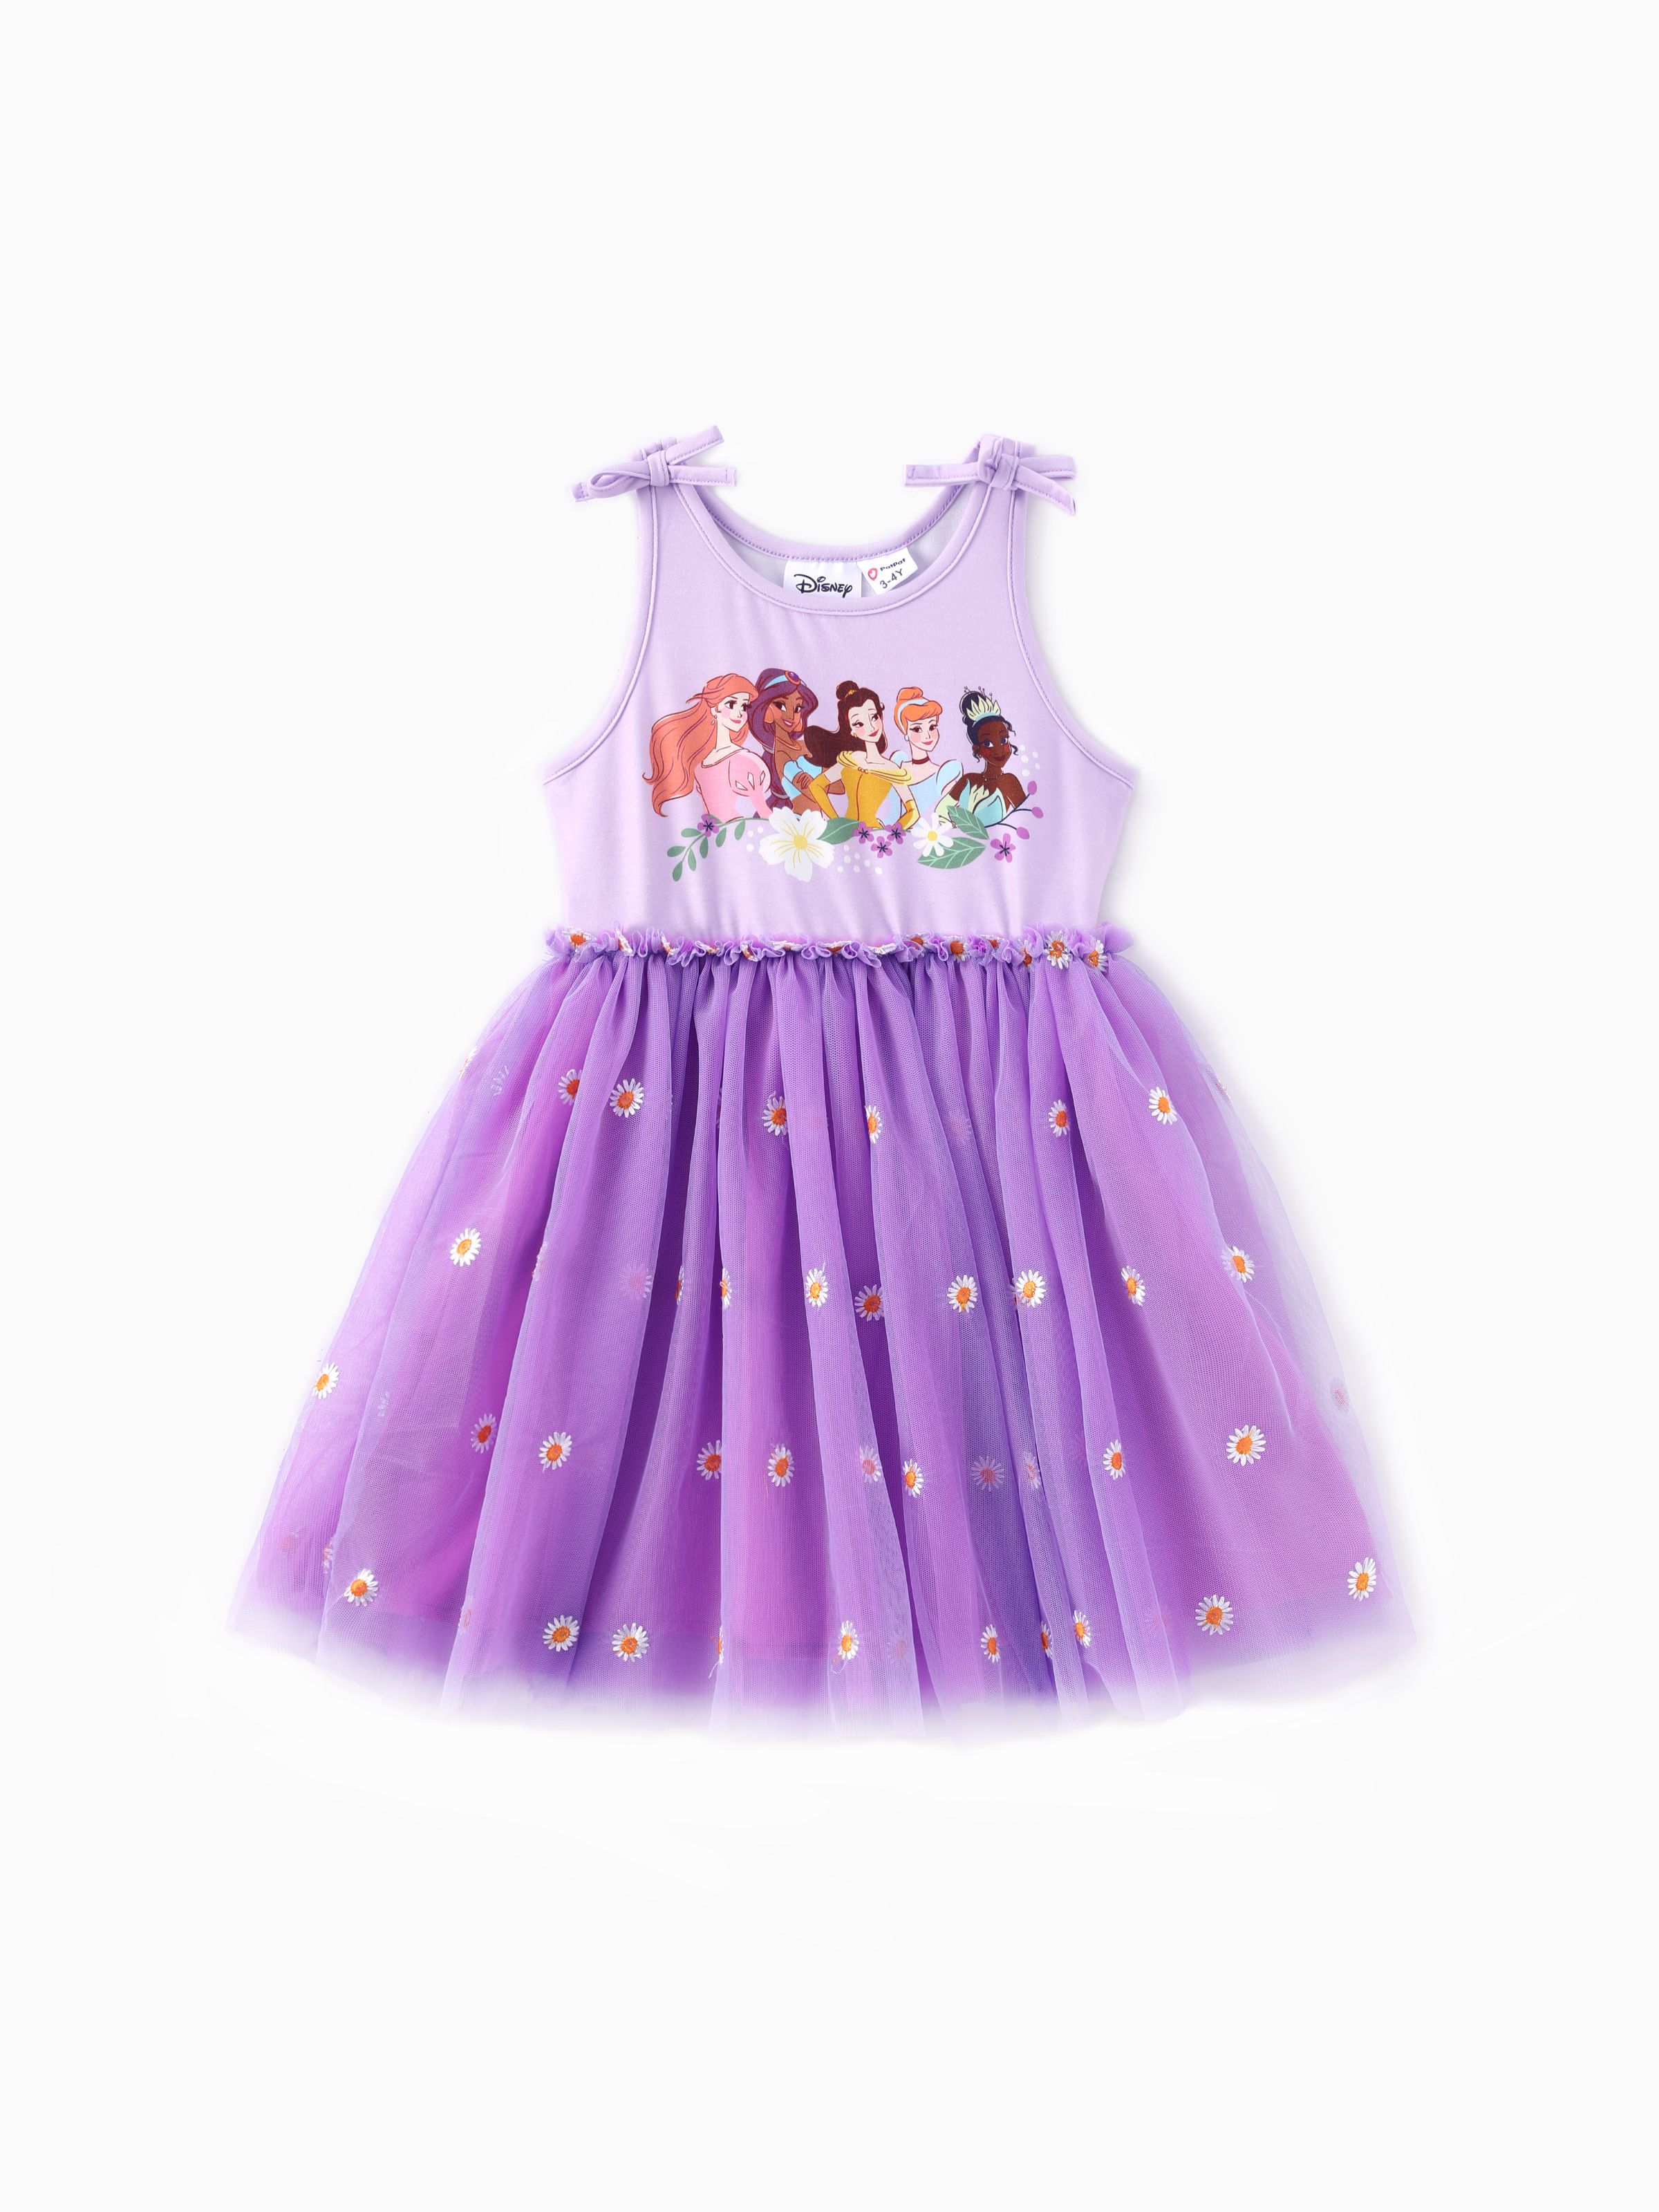 

Disney Princess Toddler Girls 1pc Naia™ All Princess Floral Print Bowknot Sleeveless Tulle Dress